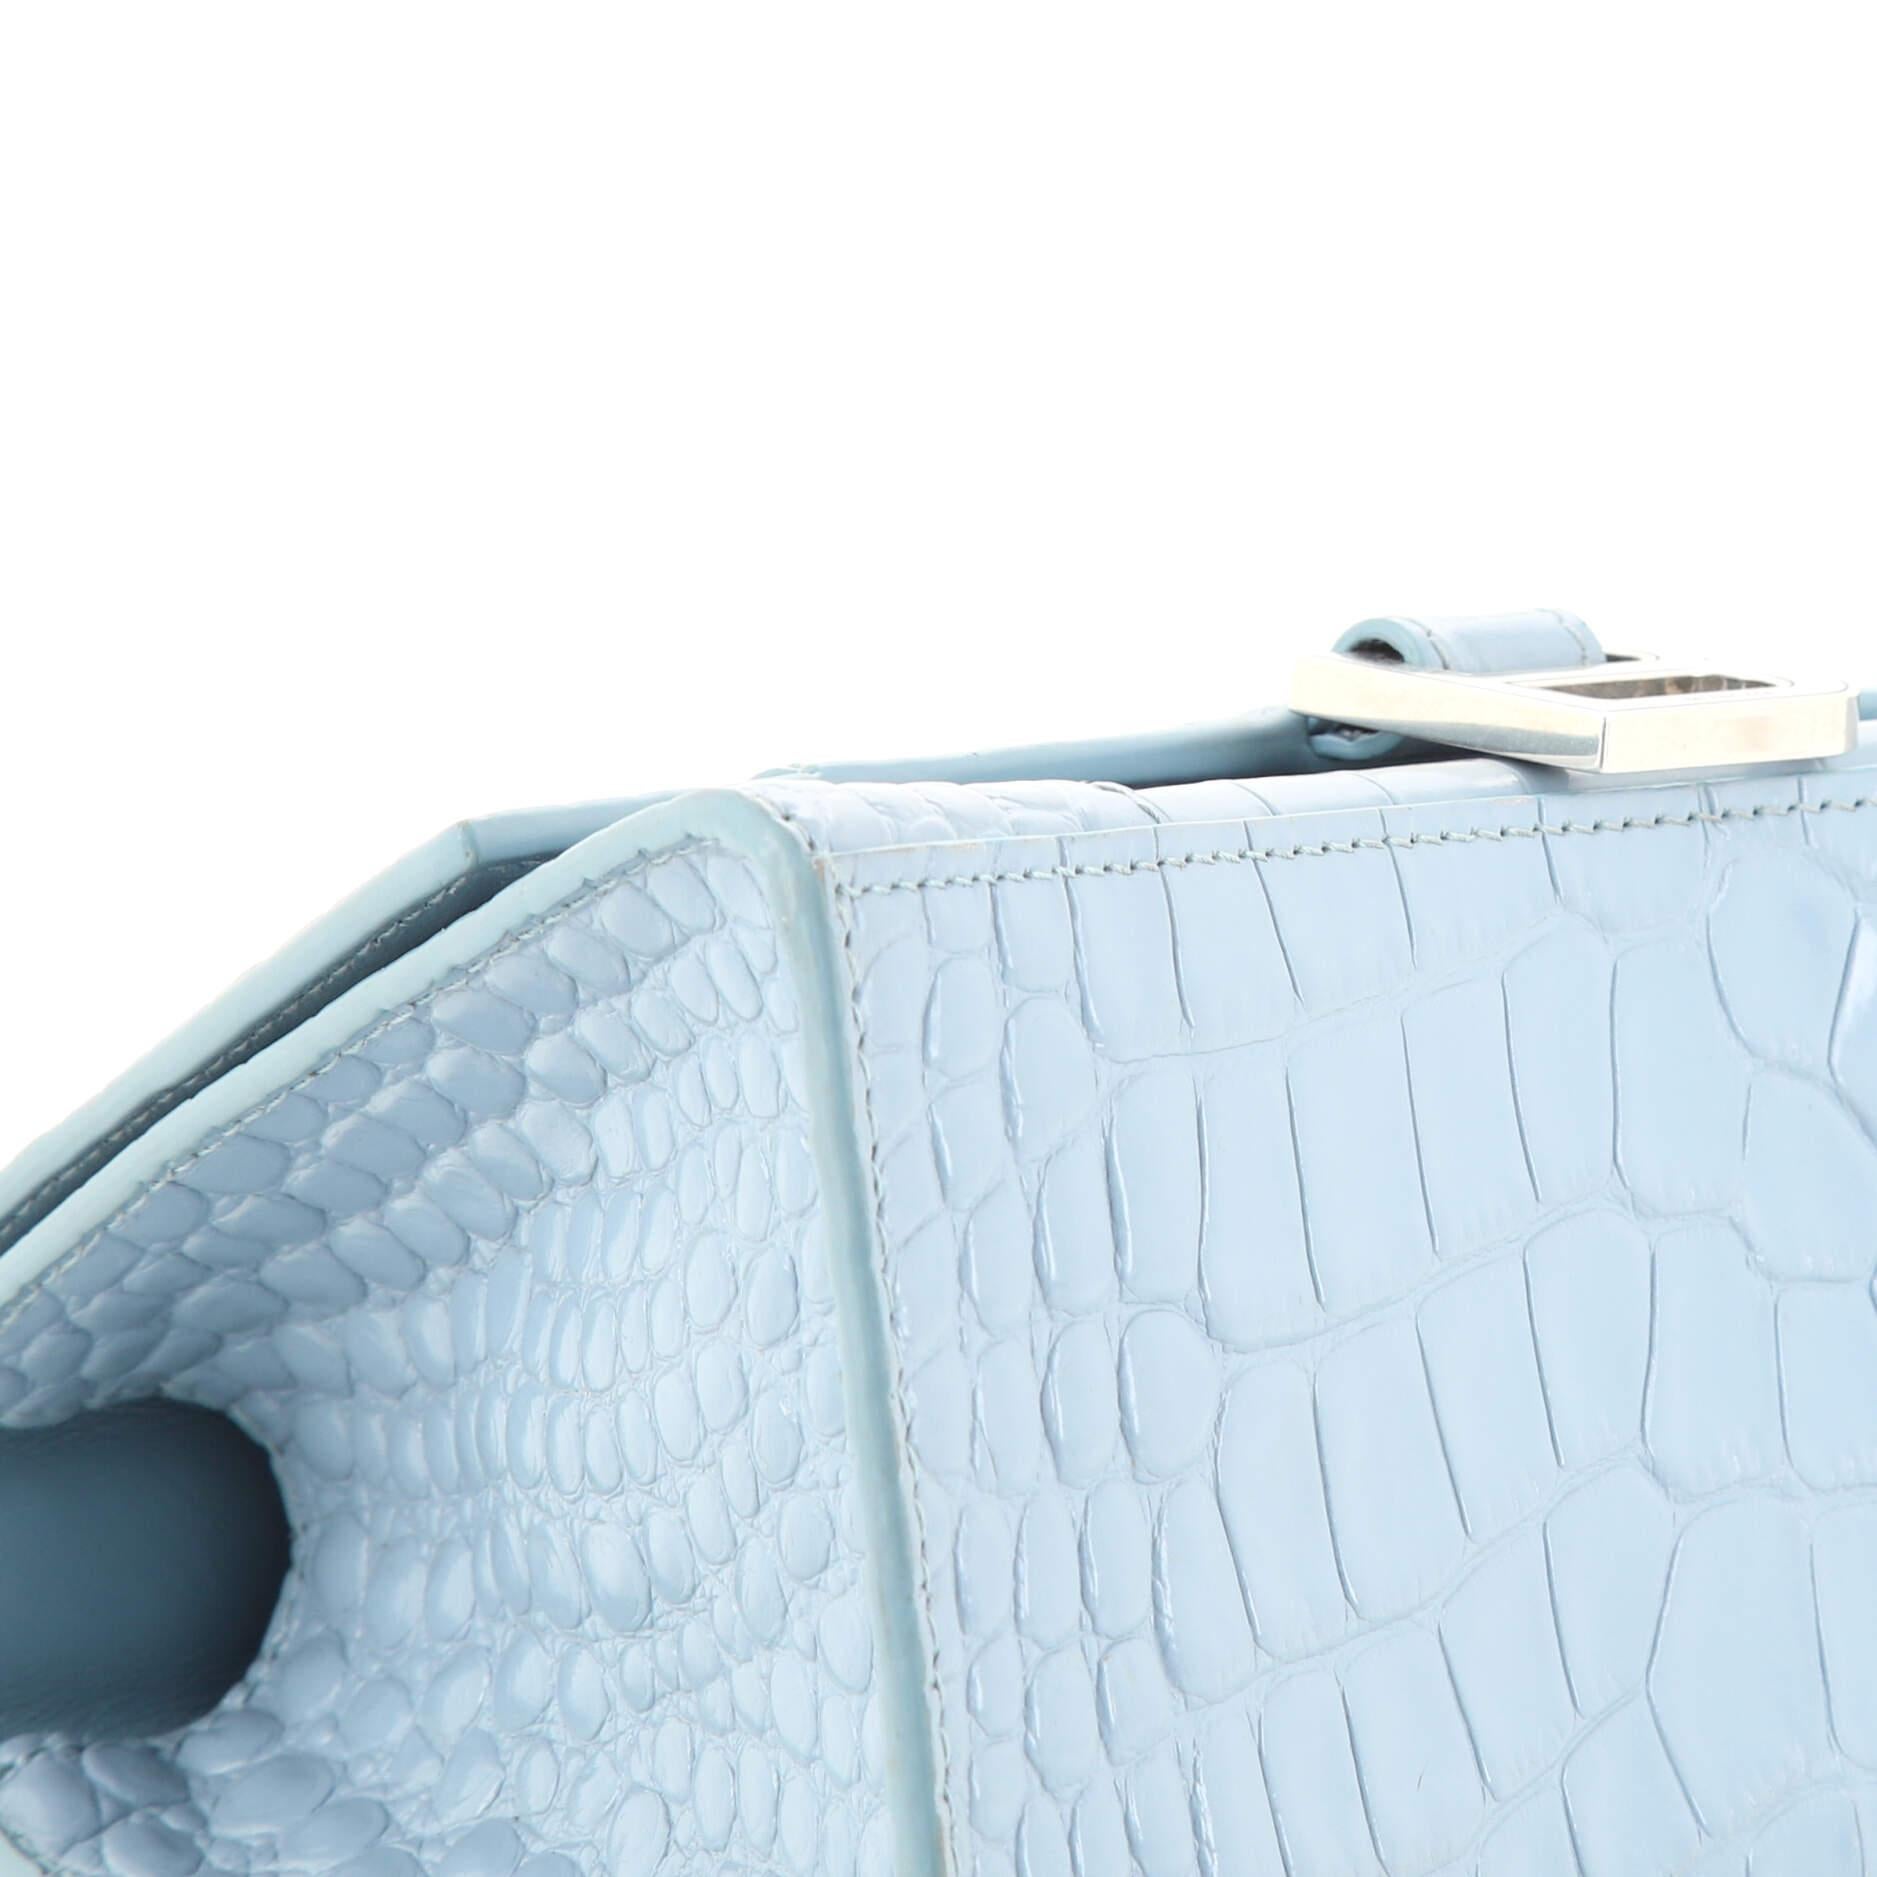 Balenciaga Hourglass Top Handle Bag Crocodile Embossed Leather Small 2